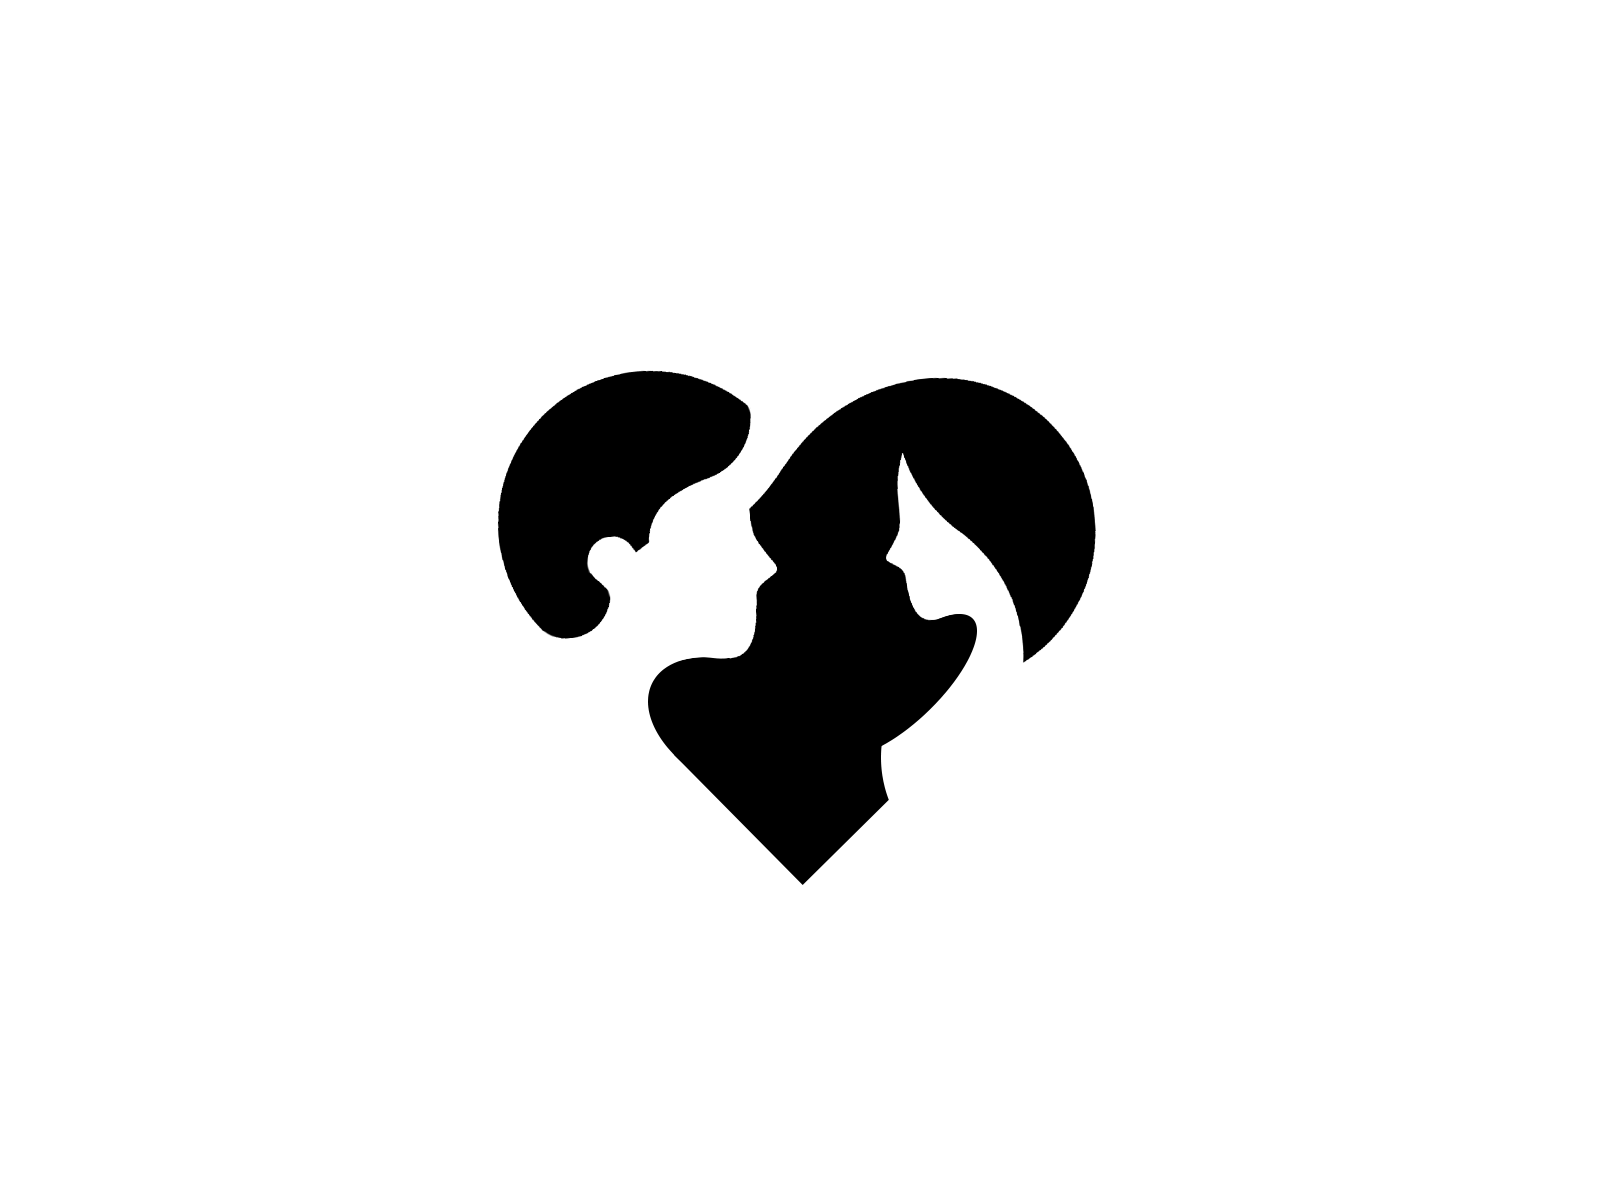 Logo for a brand called Love by Zdenek Hejda on Dribbble